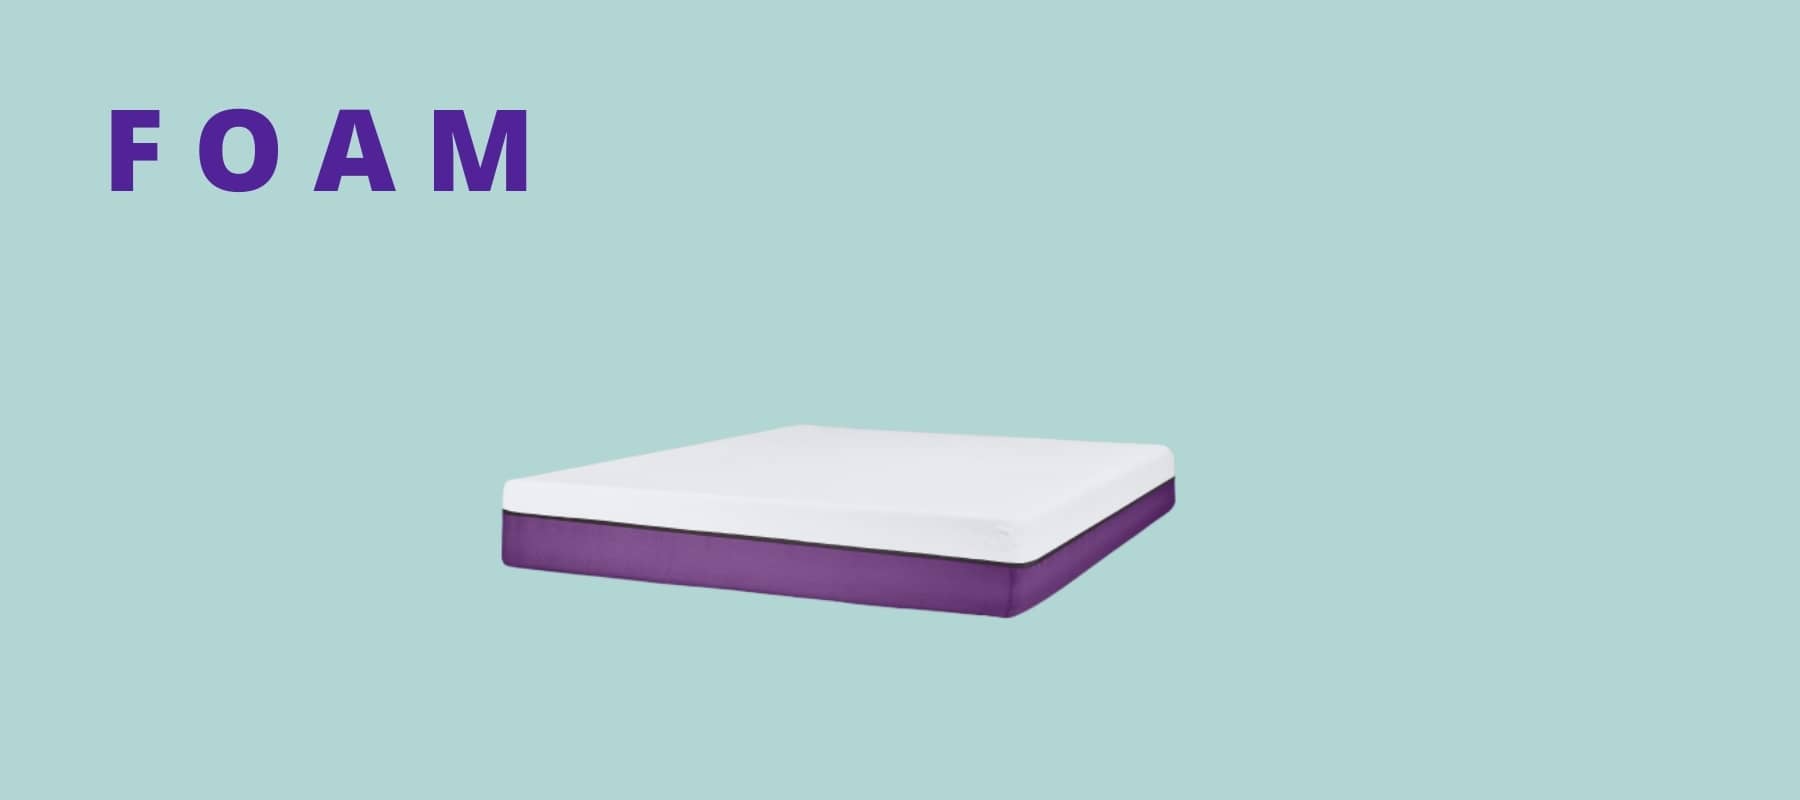 Foam mattresses tend to store heat